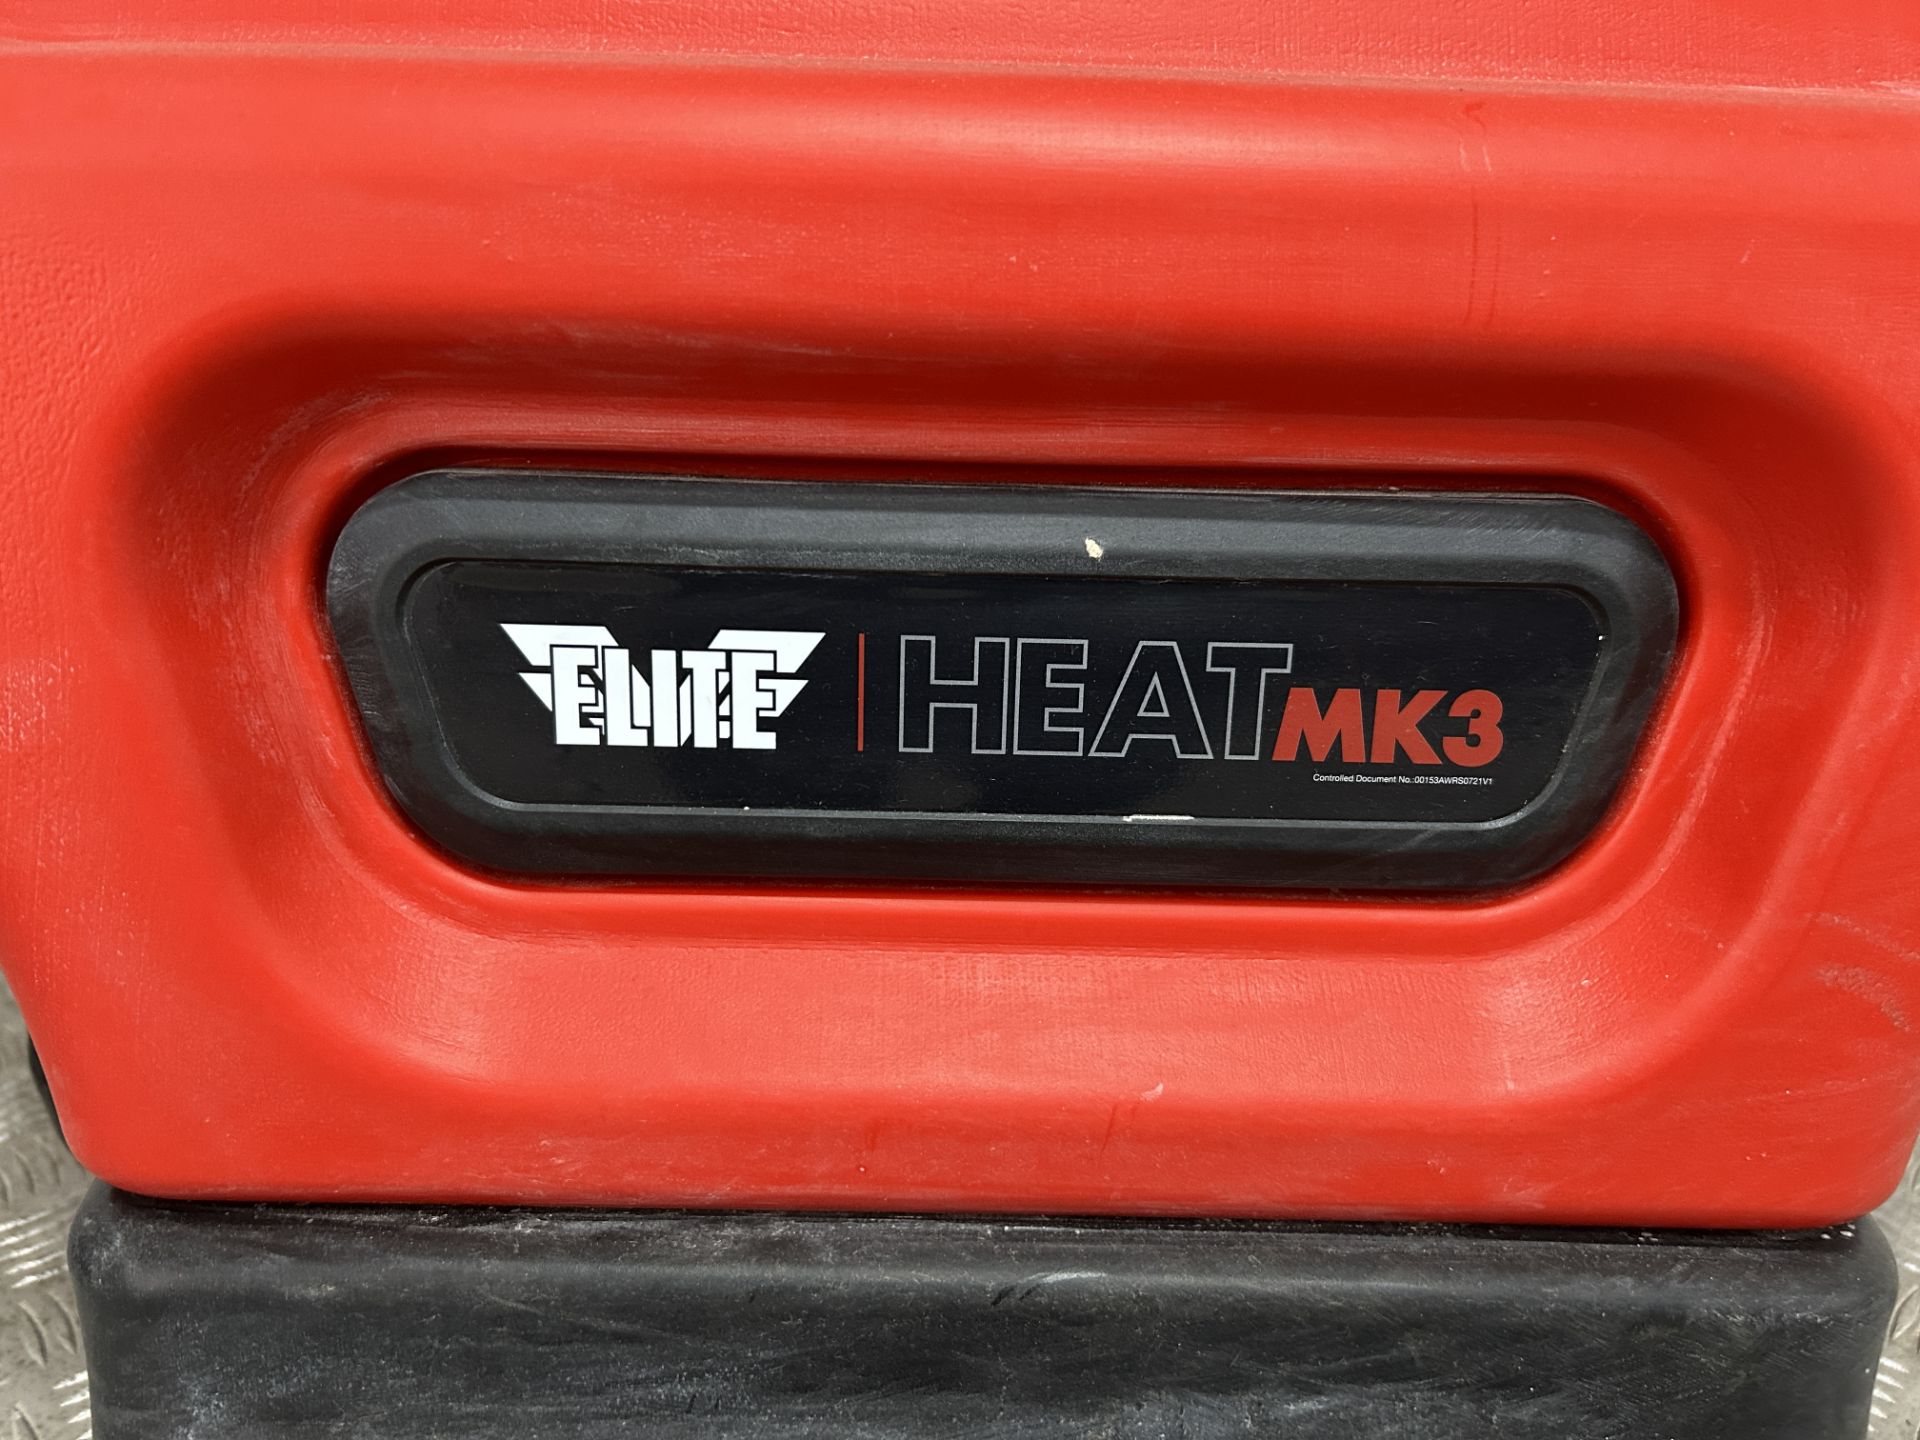 Elite Heat EH240MK3 Portable Halogen Infrared Heater - Image 4 of 7